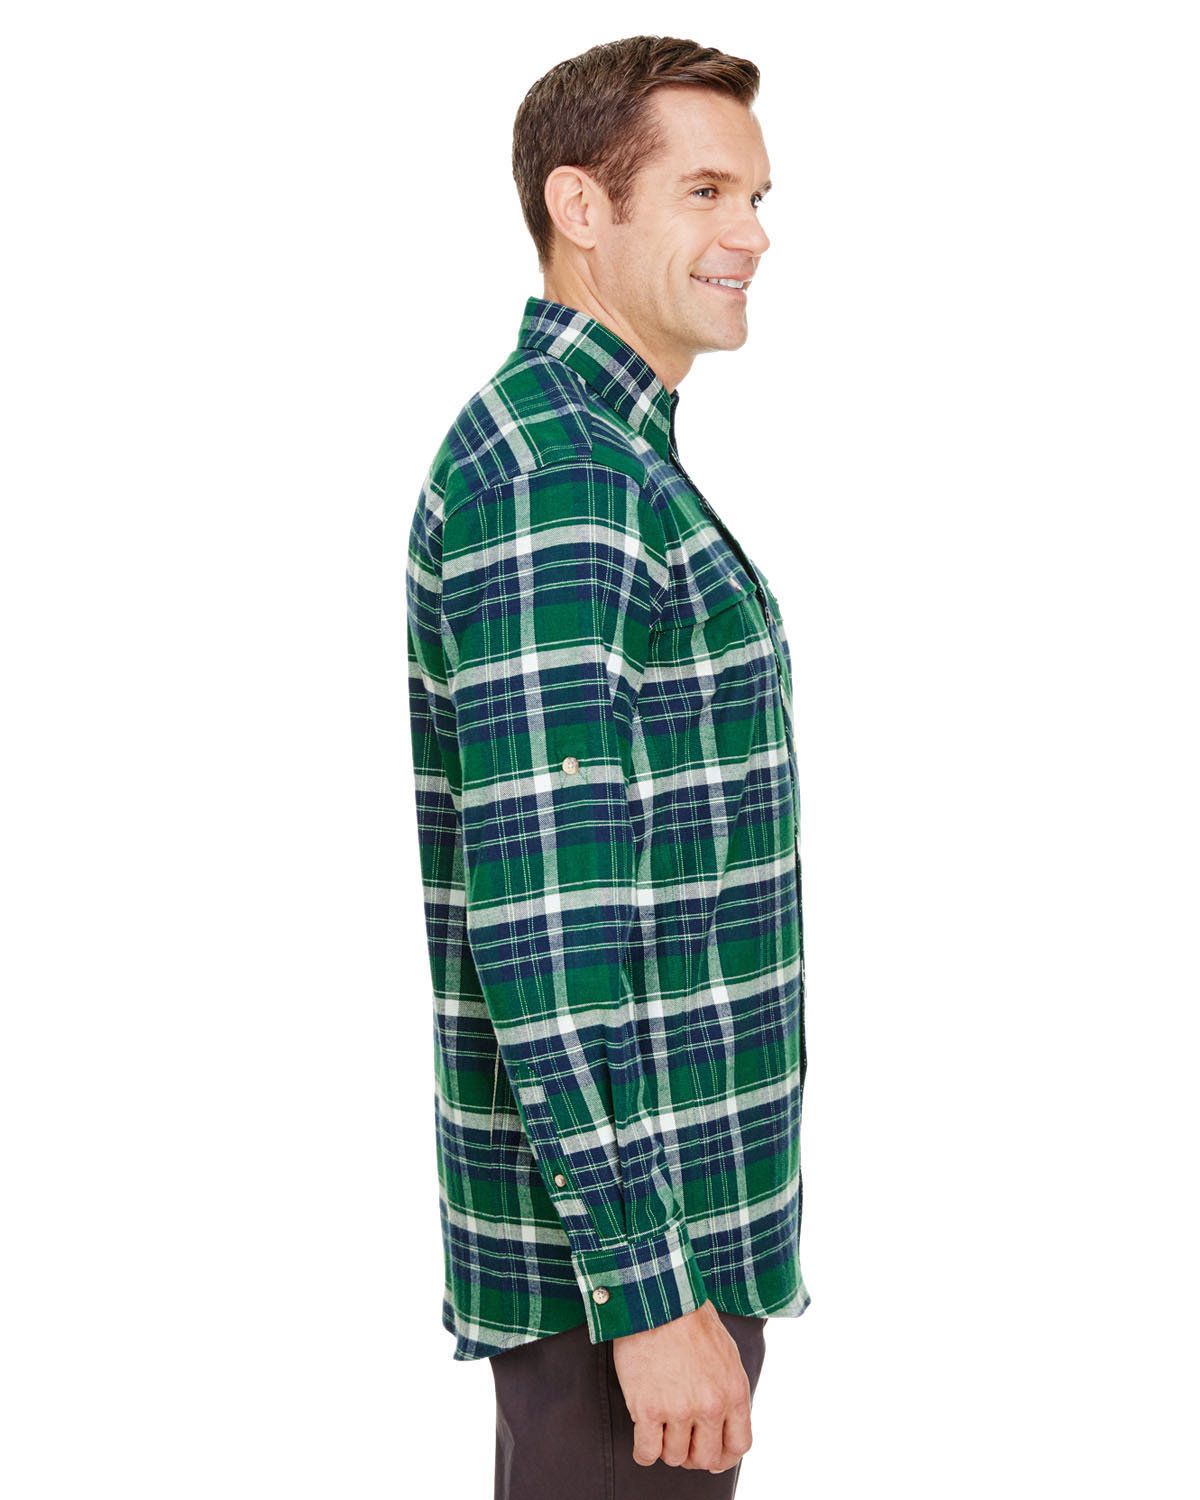 'Backpacker BP7091 Men's Stretch Flannel Shirt'